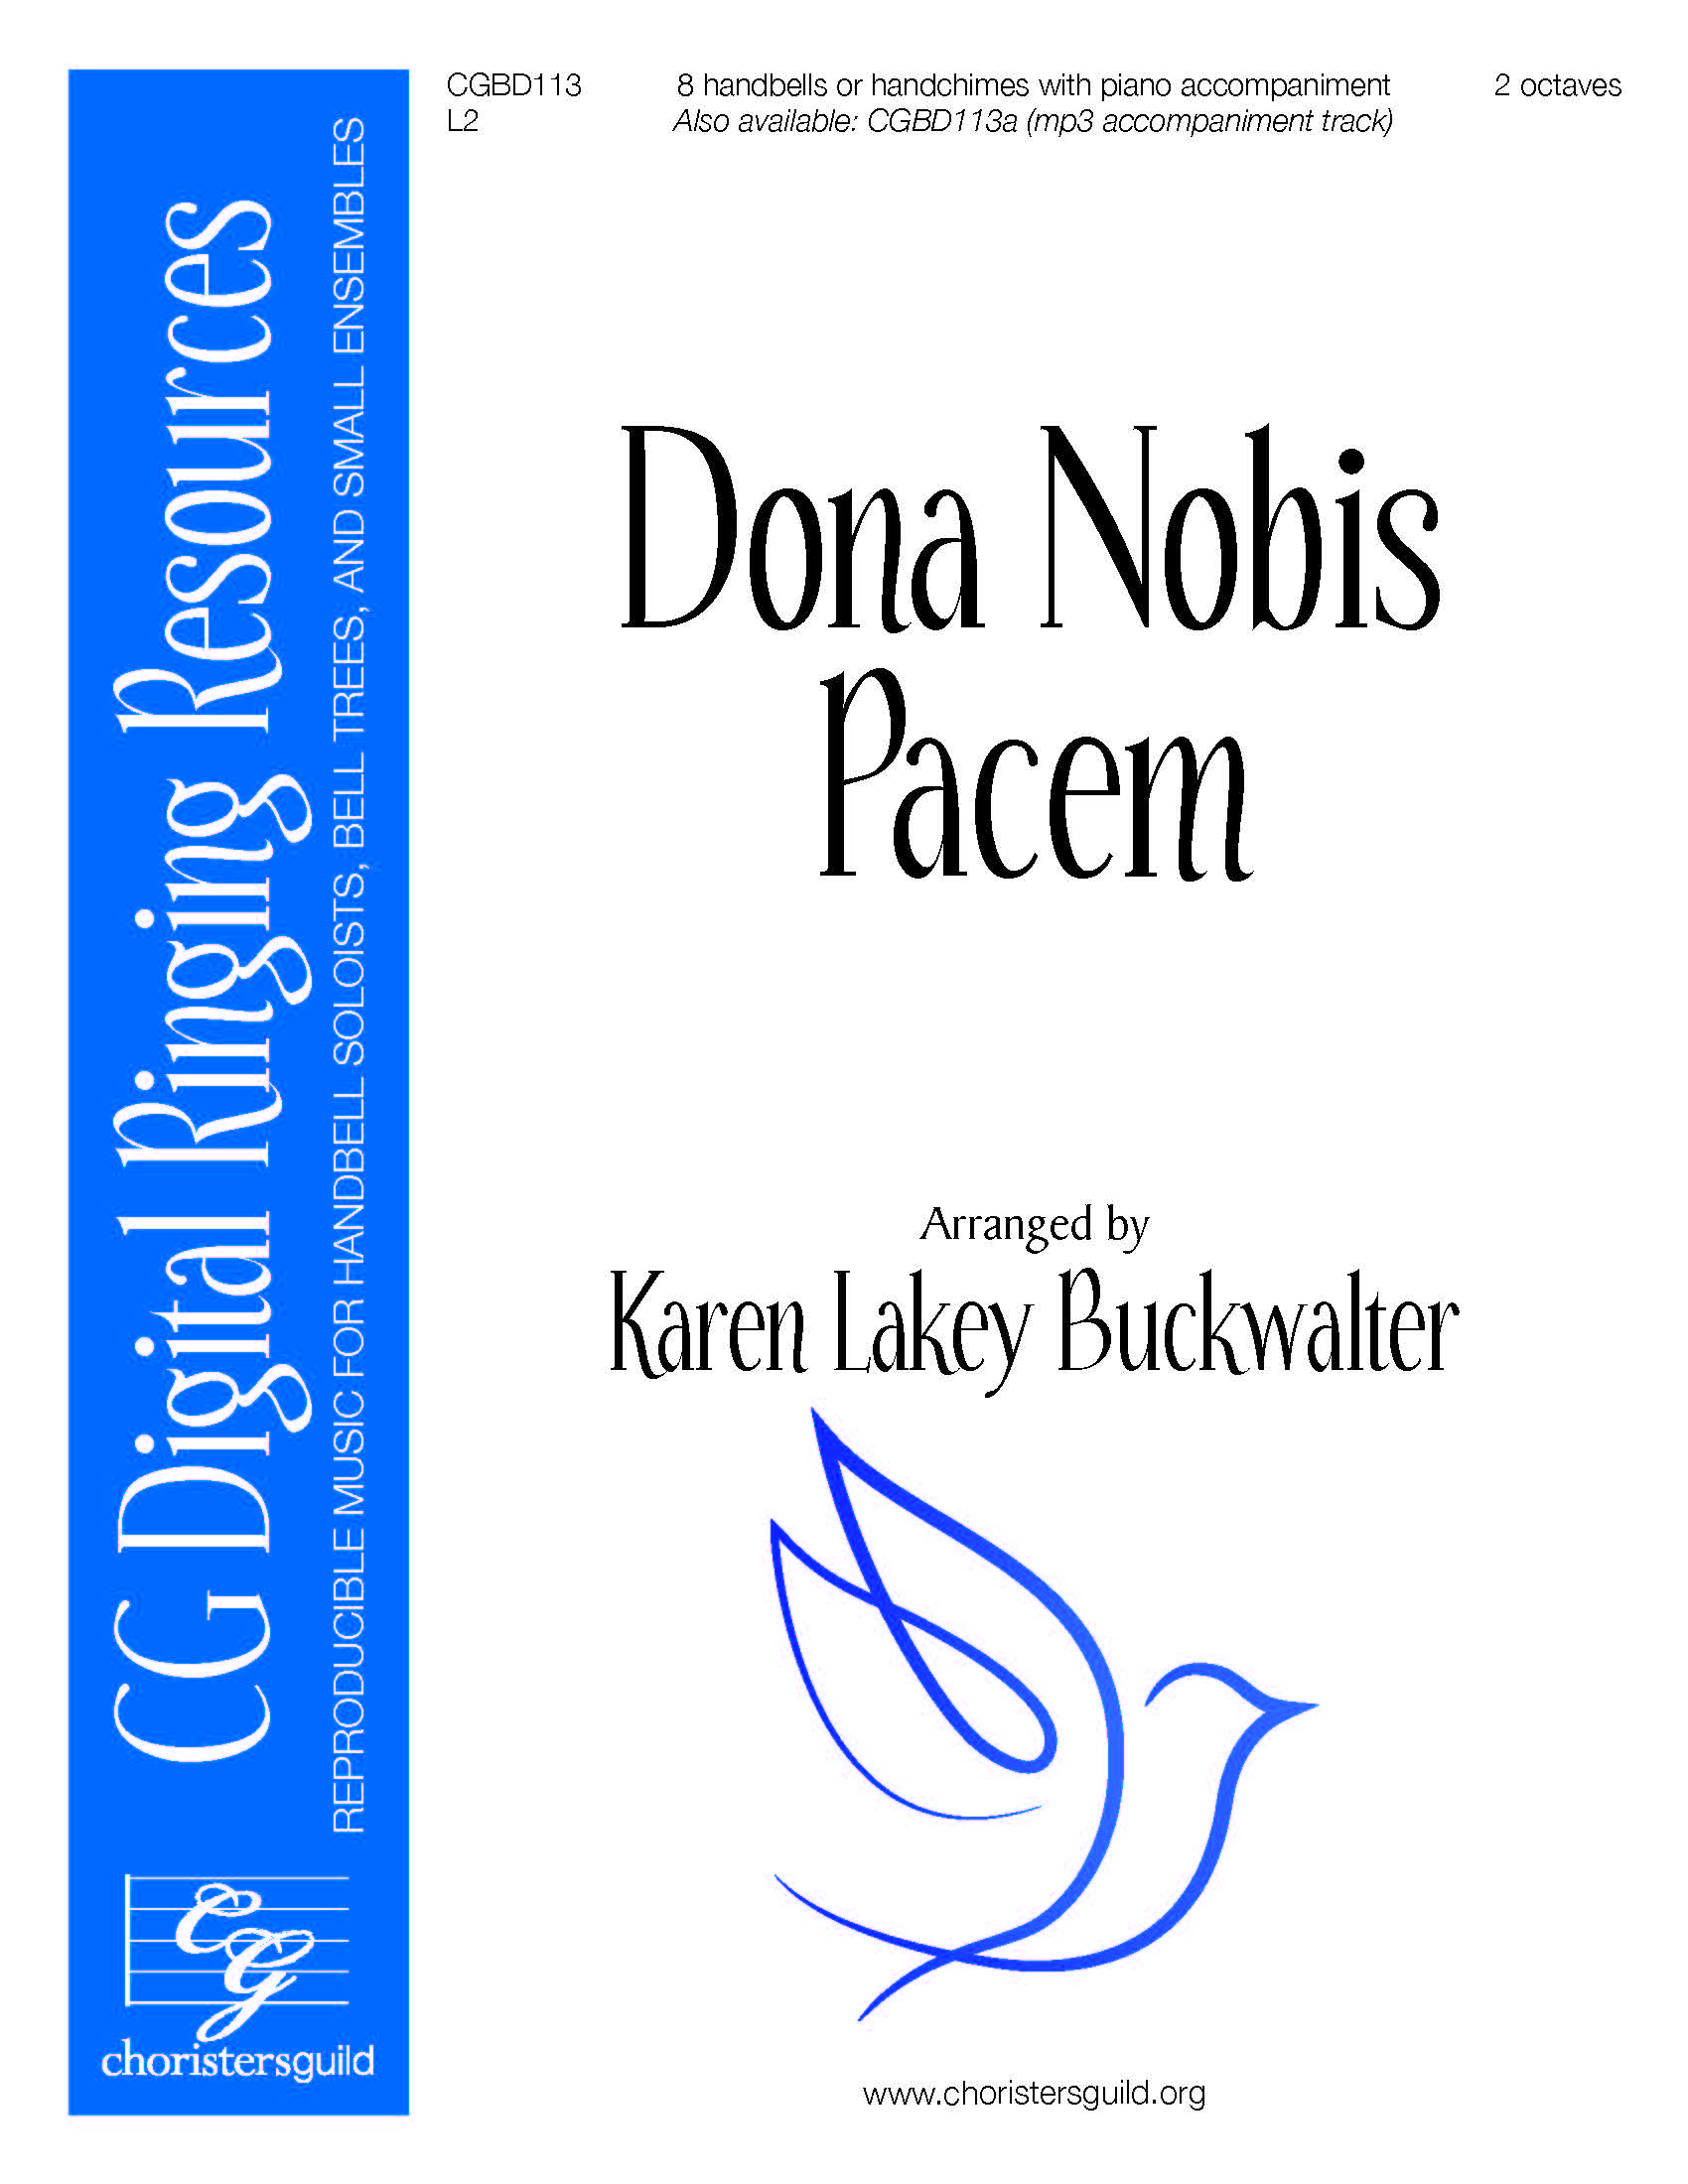 Dona Nobis Pacem - Digital Accompaniment Track